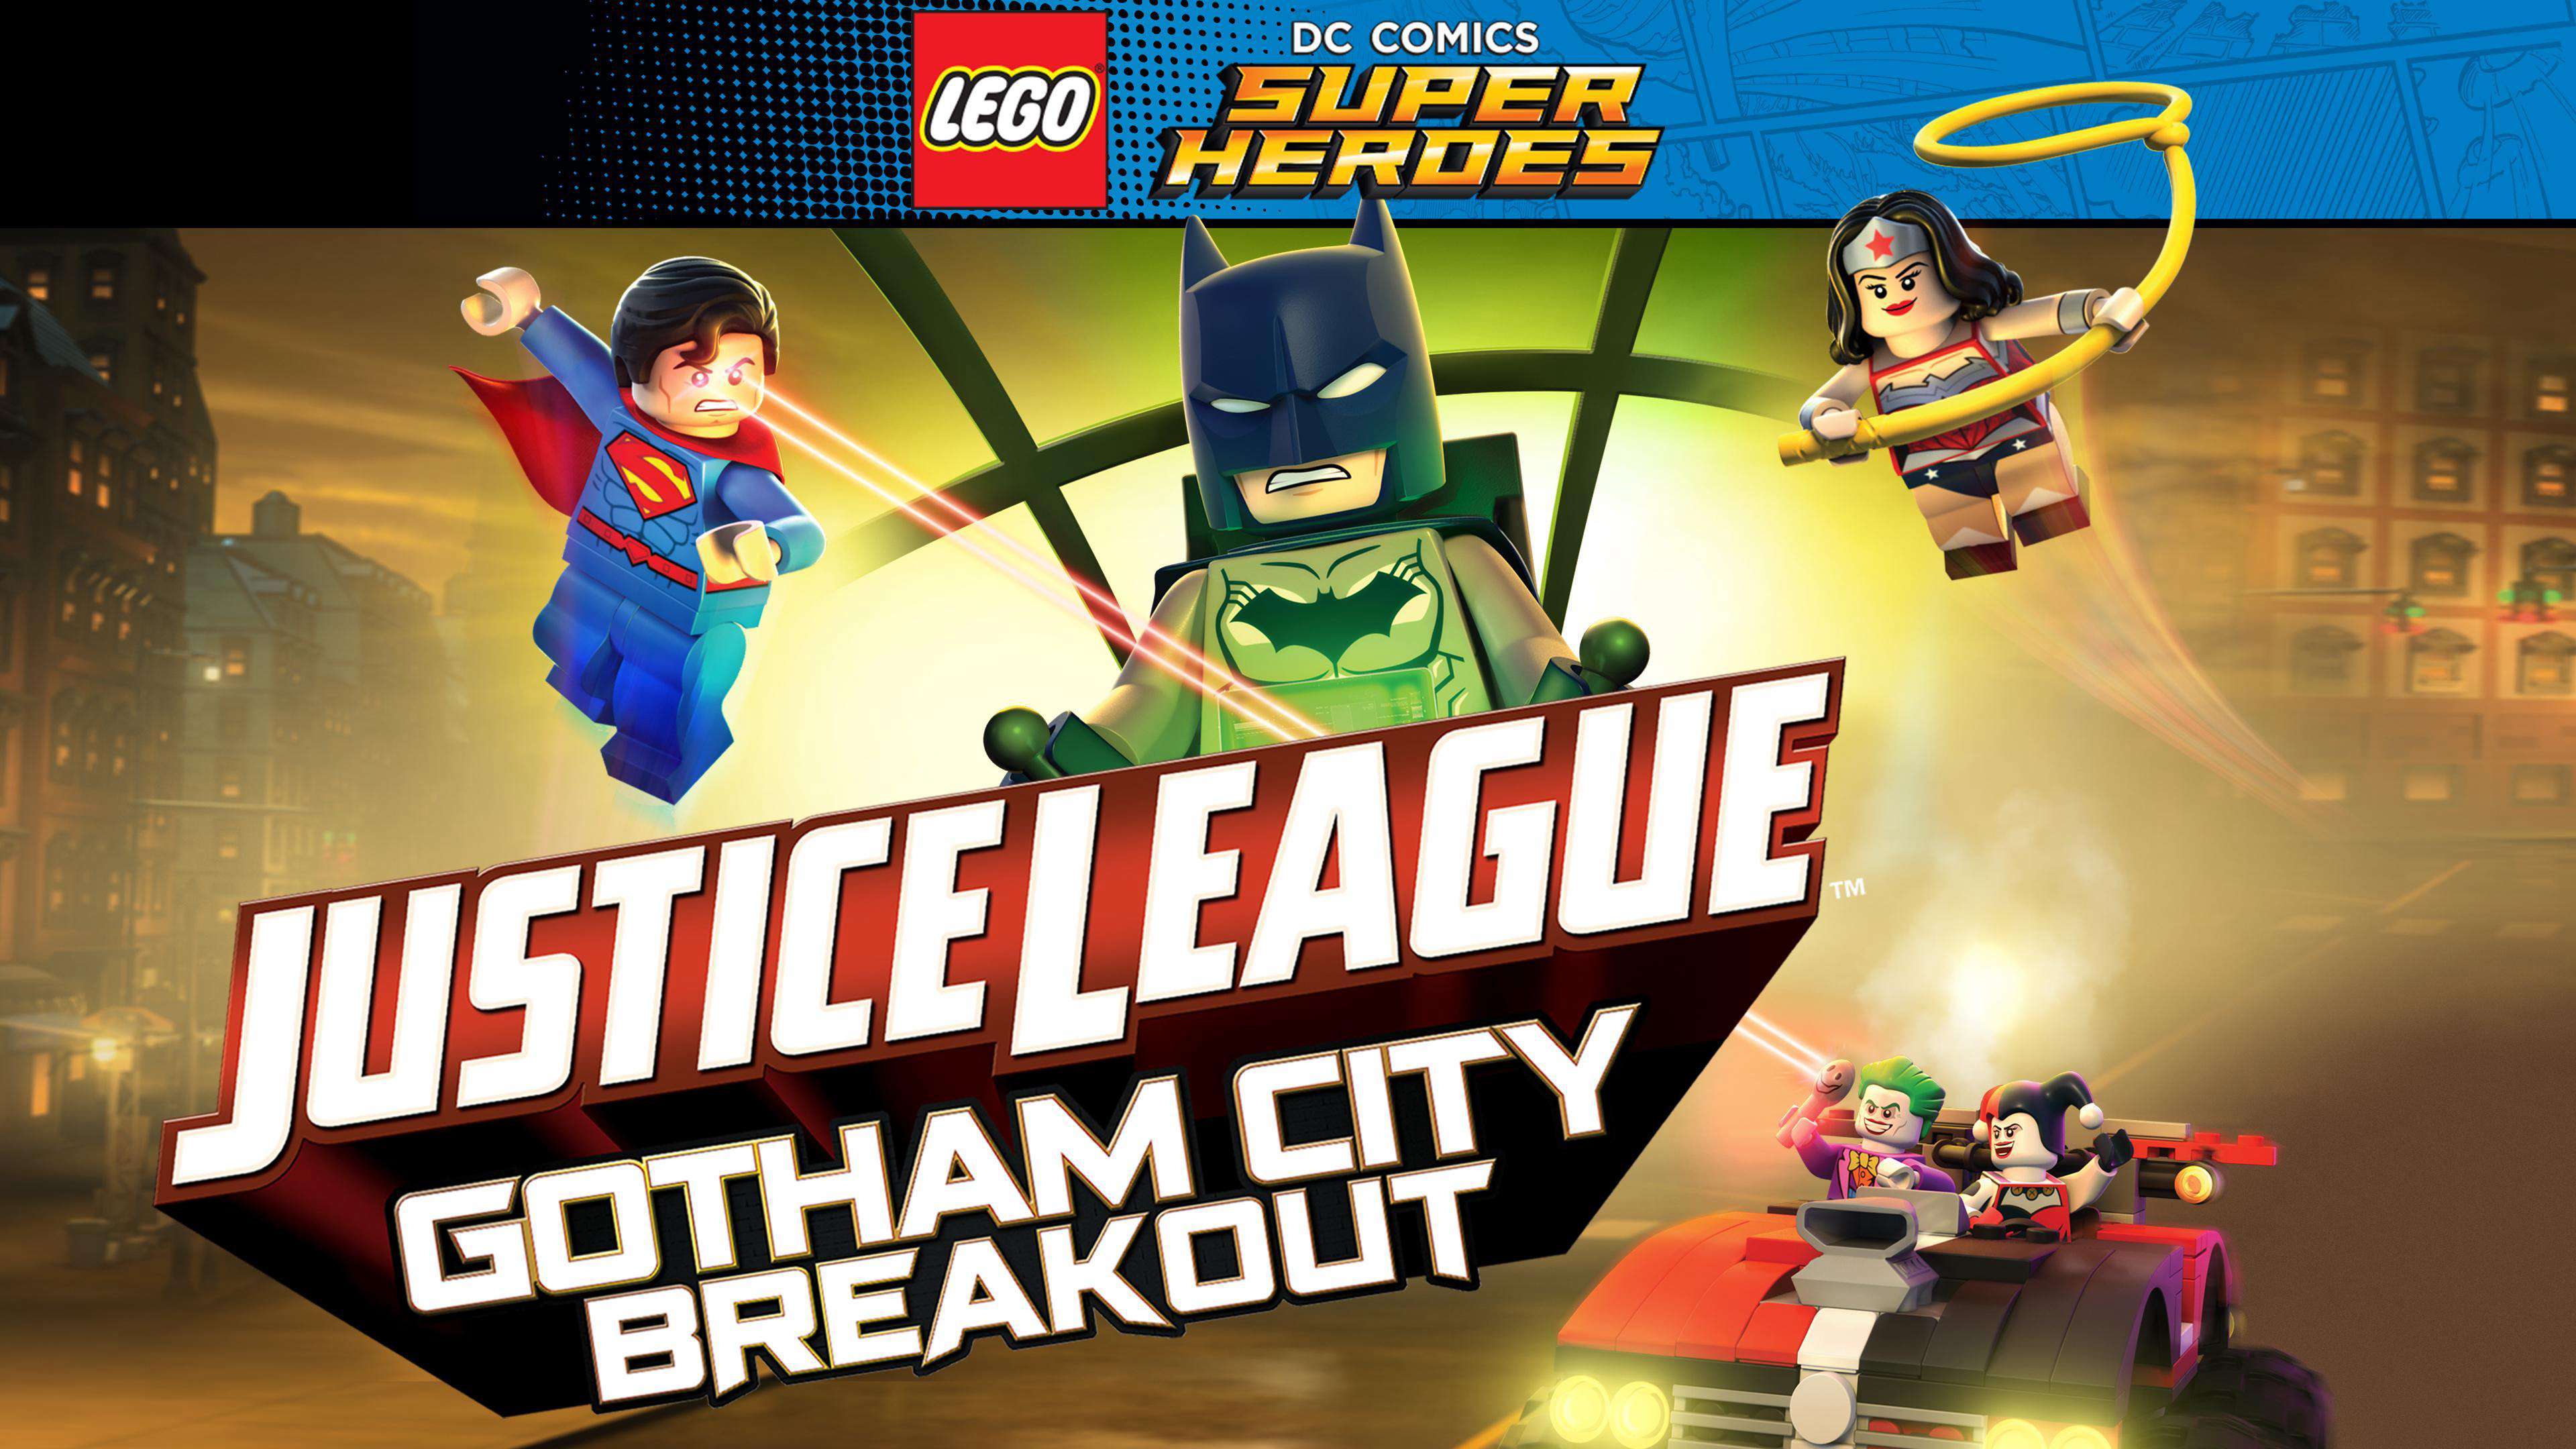 Poster Phim Lego DC Comics Superheroes: Justice League - Gotham City Breakout (Lego DC Comics Superheroes: Justice League - Gotham City Breakout)